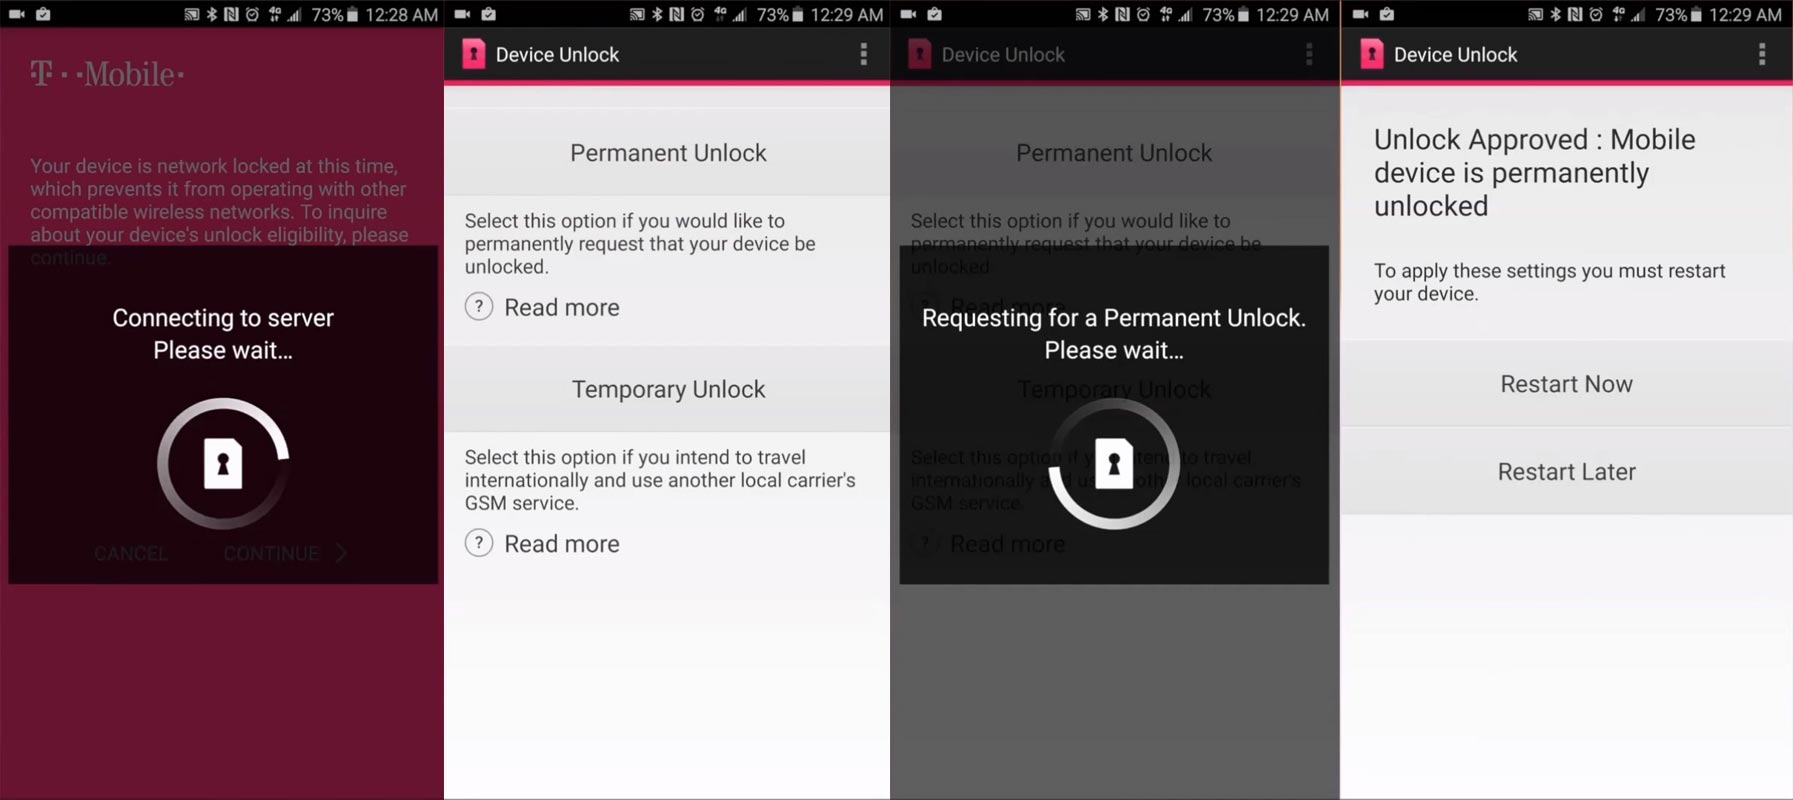 T-Mobile Permanent Unlock App Screenshots